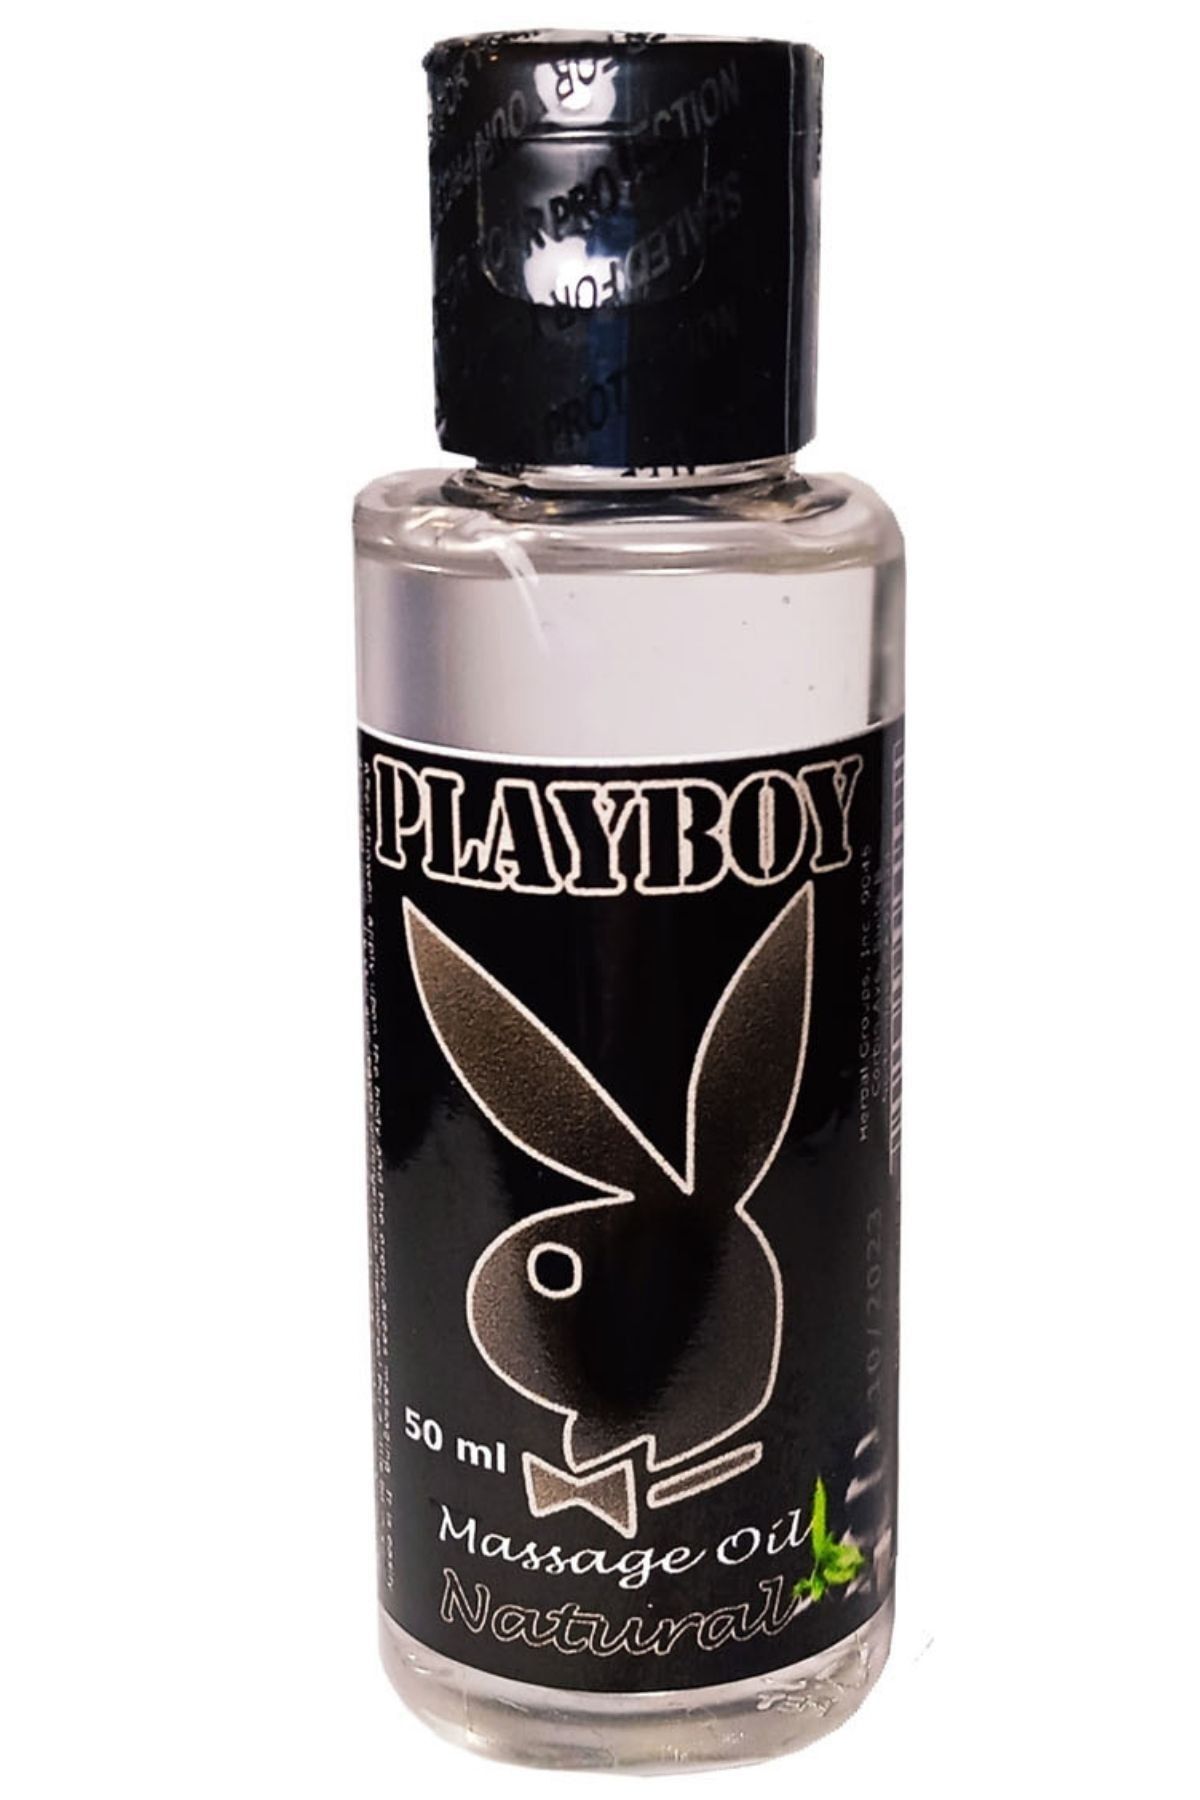 Playboy Masaj Yağı Naturel Aromaterapi 50ml / Massage Oil Natural Aromatherapy 50ml